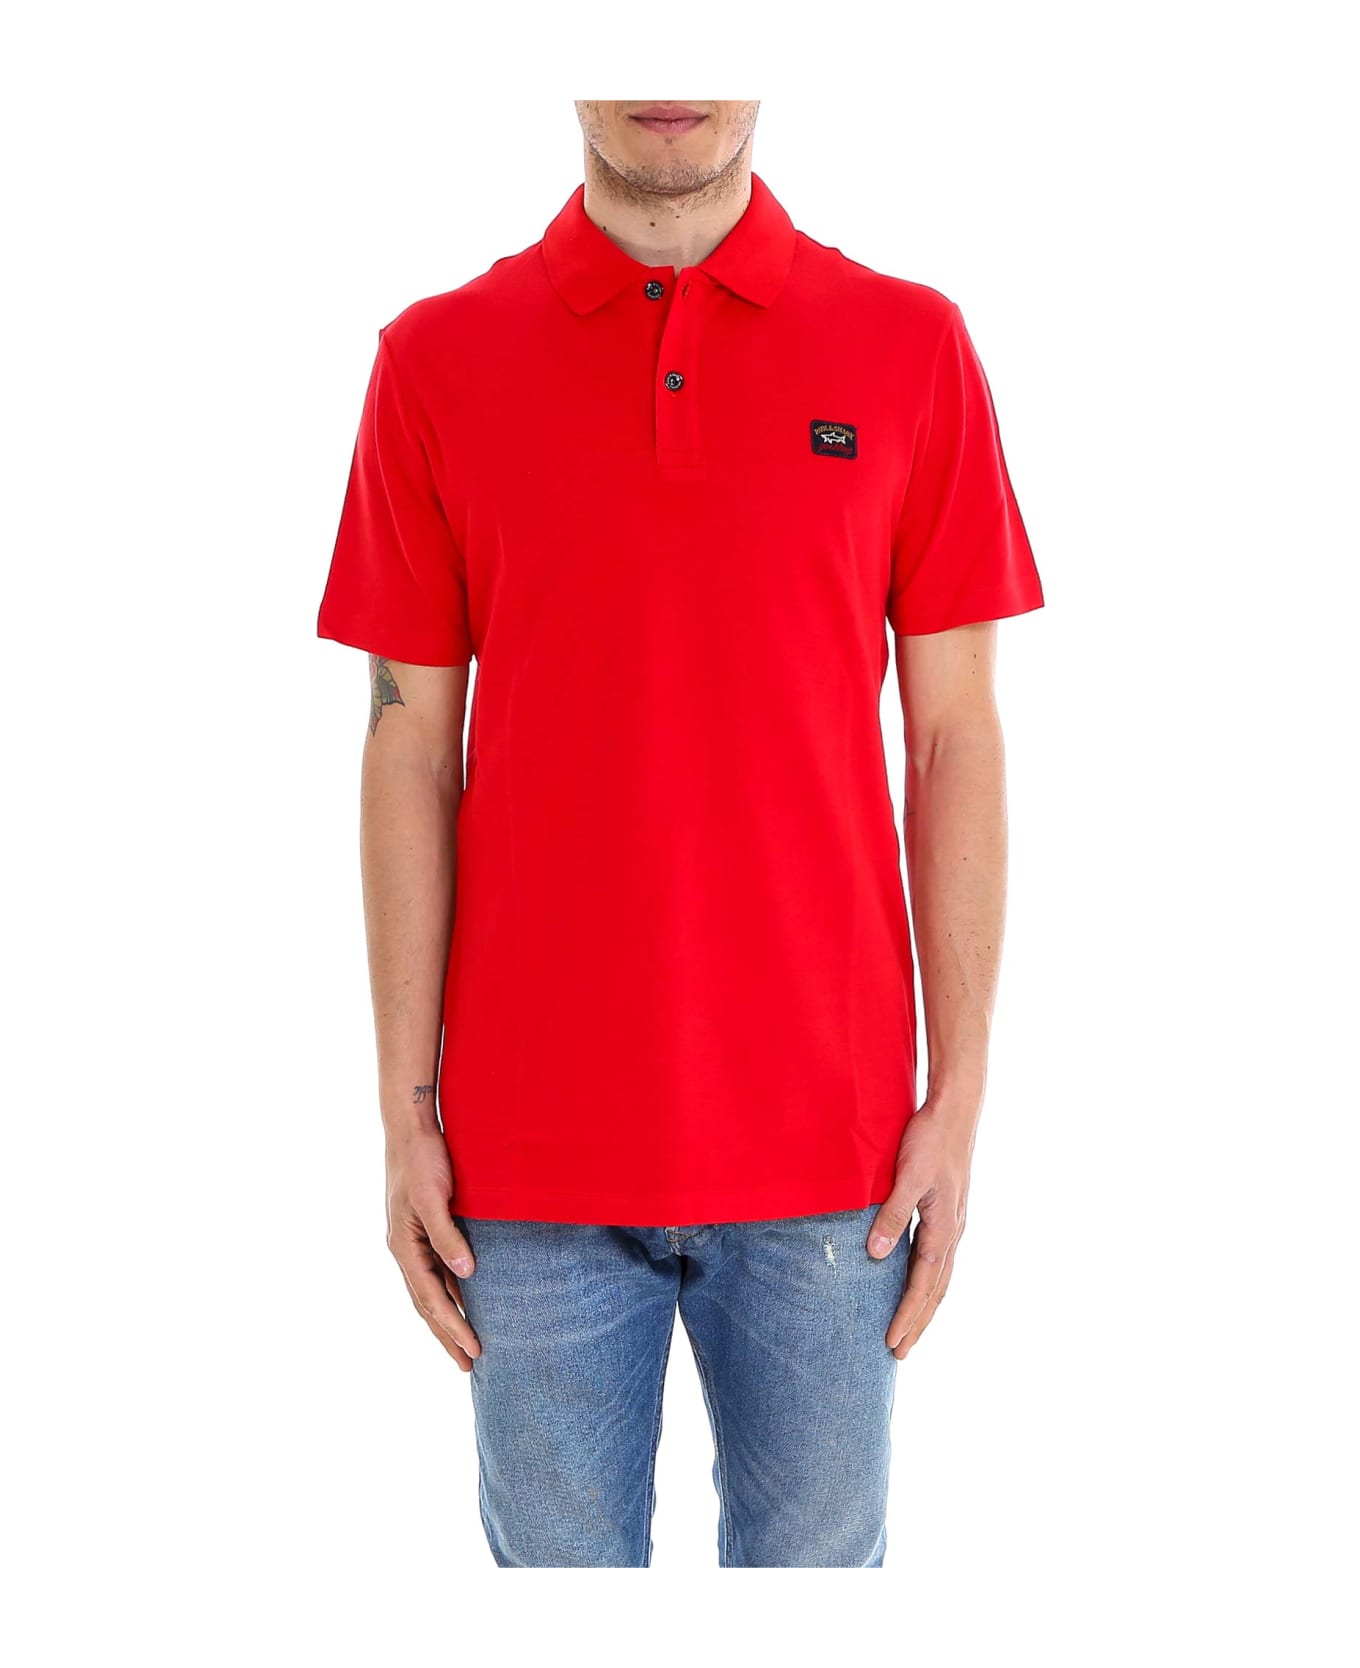 Paul&Shark Polo Shirt - RED ポロシャツ